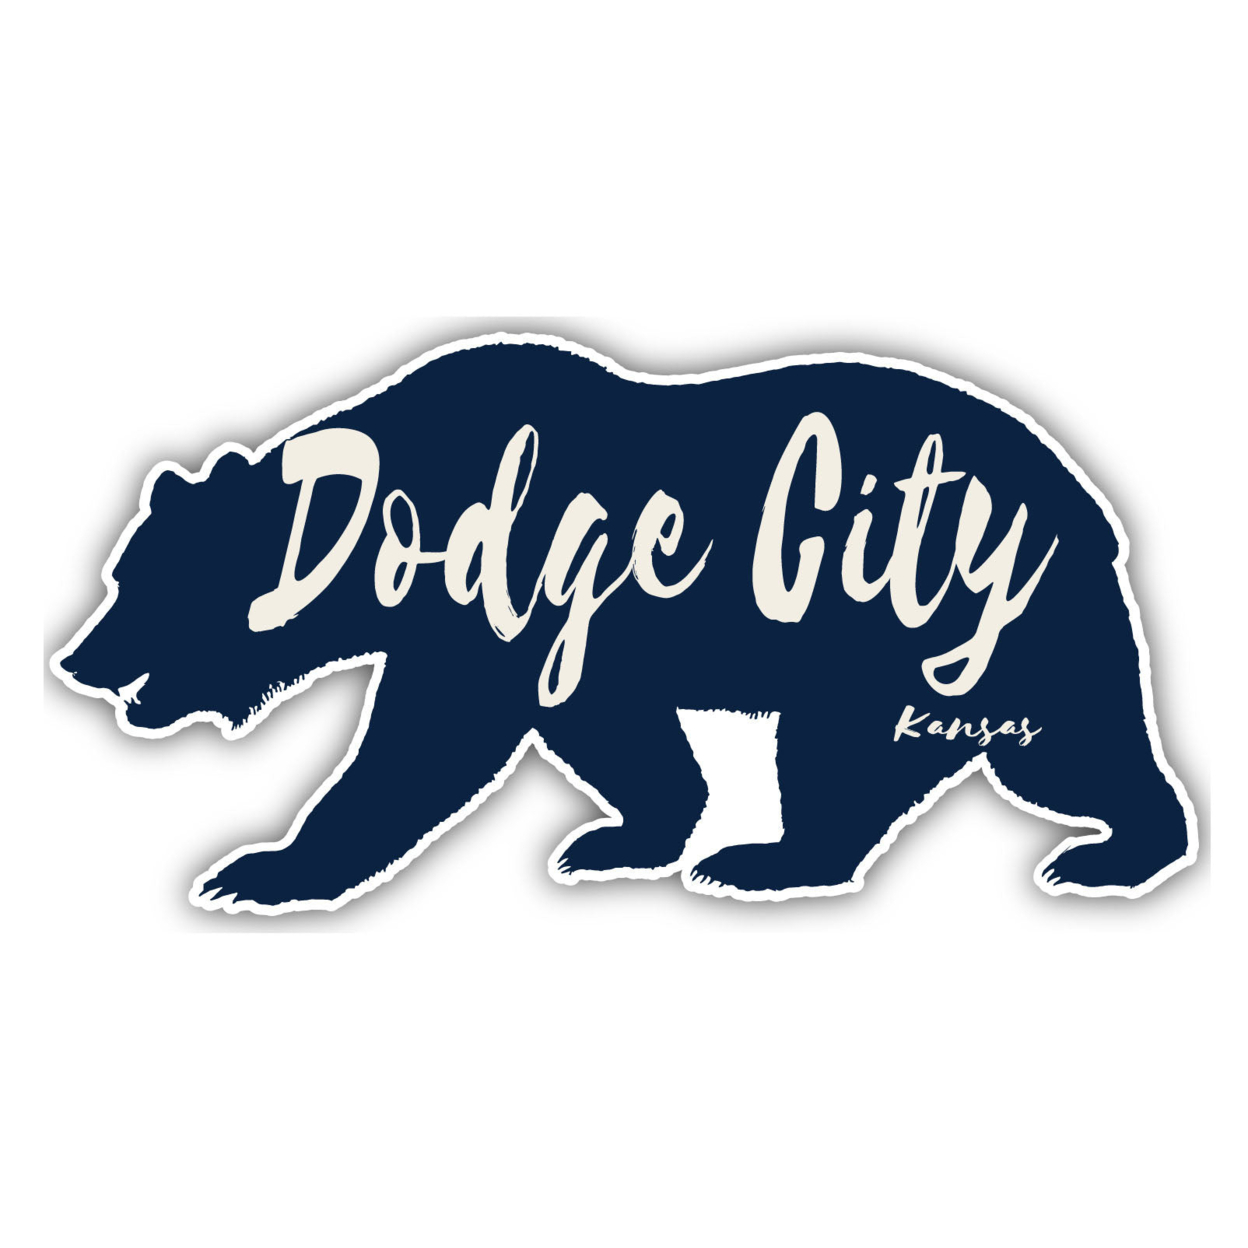 Dodge City Kansas Souvenir Decorative Stickers (Choose Theme And Size) - 4-Pack, 4-Inch, Tent